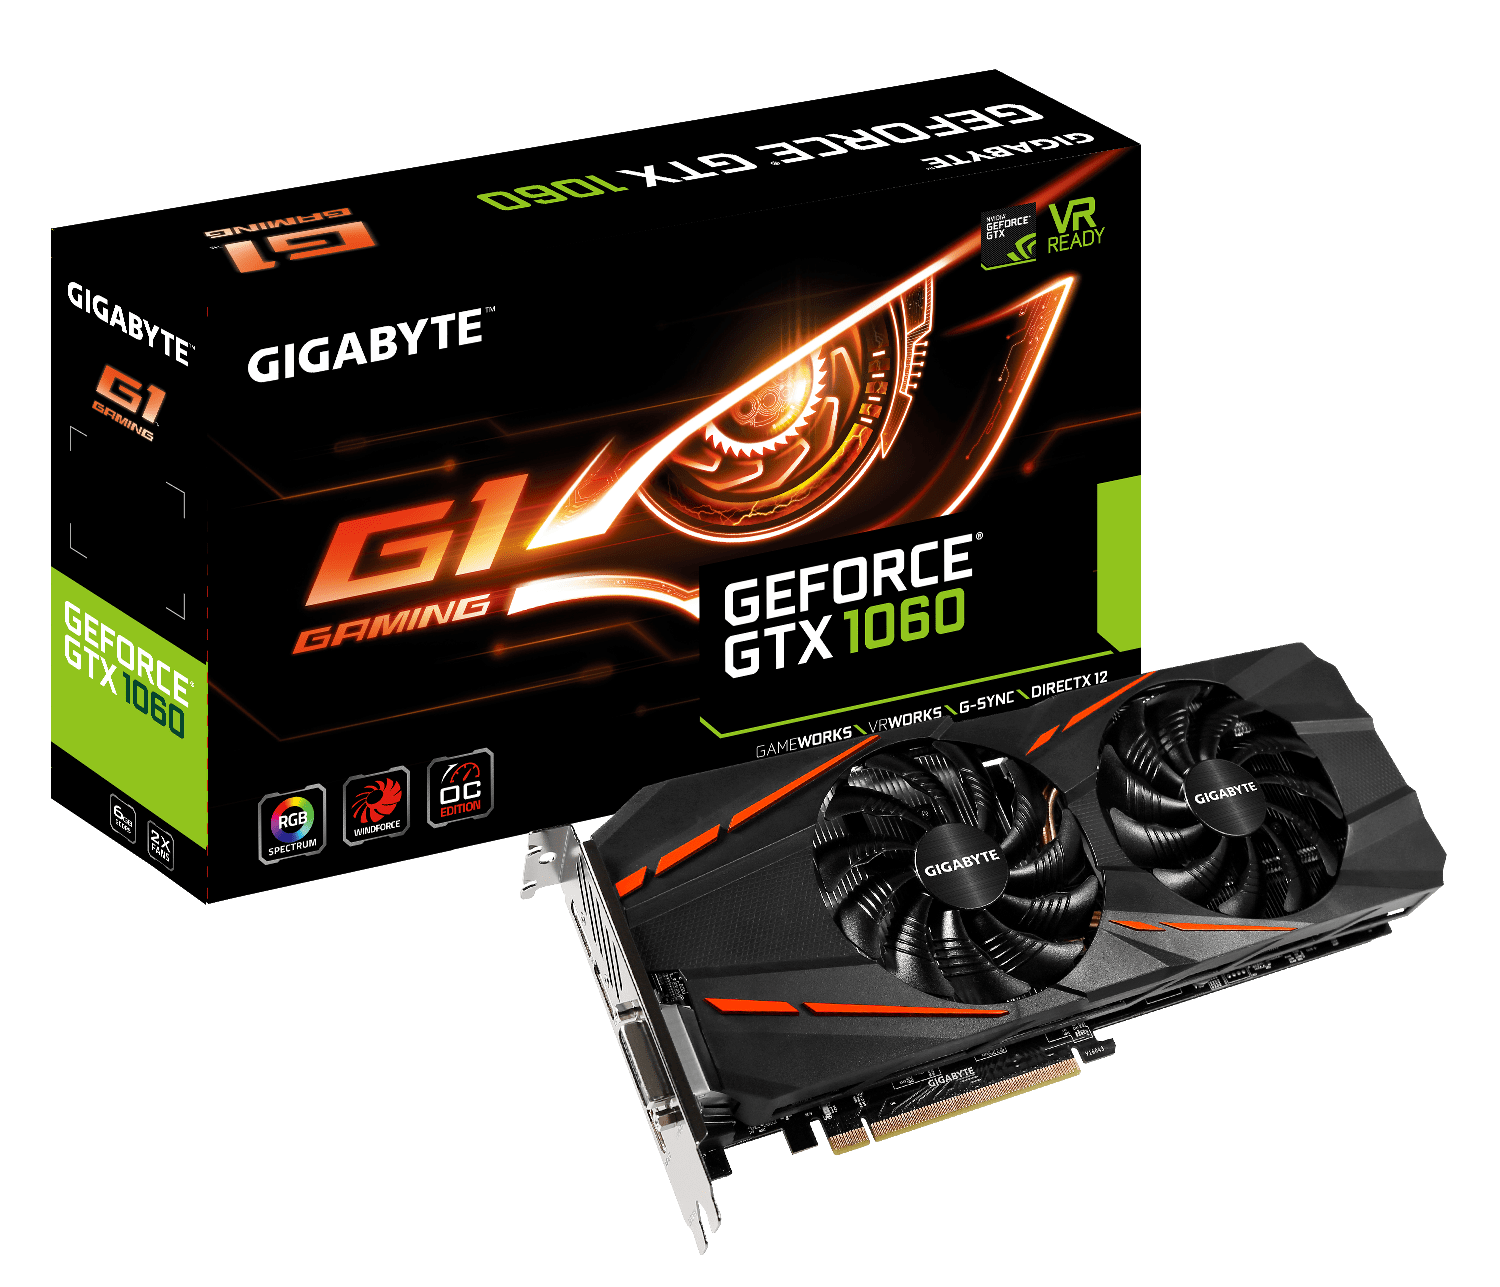 Gigabyte GTX 1060 Gaming Radeon RX 480 G1 GAMING 1